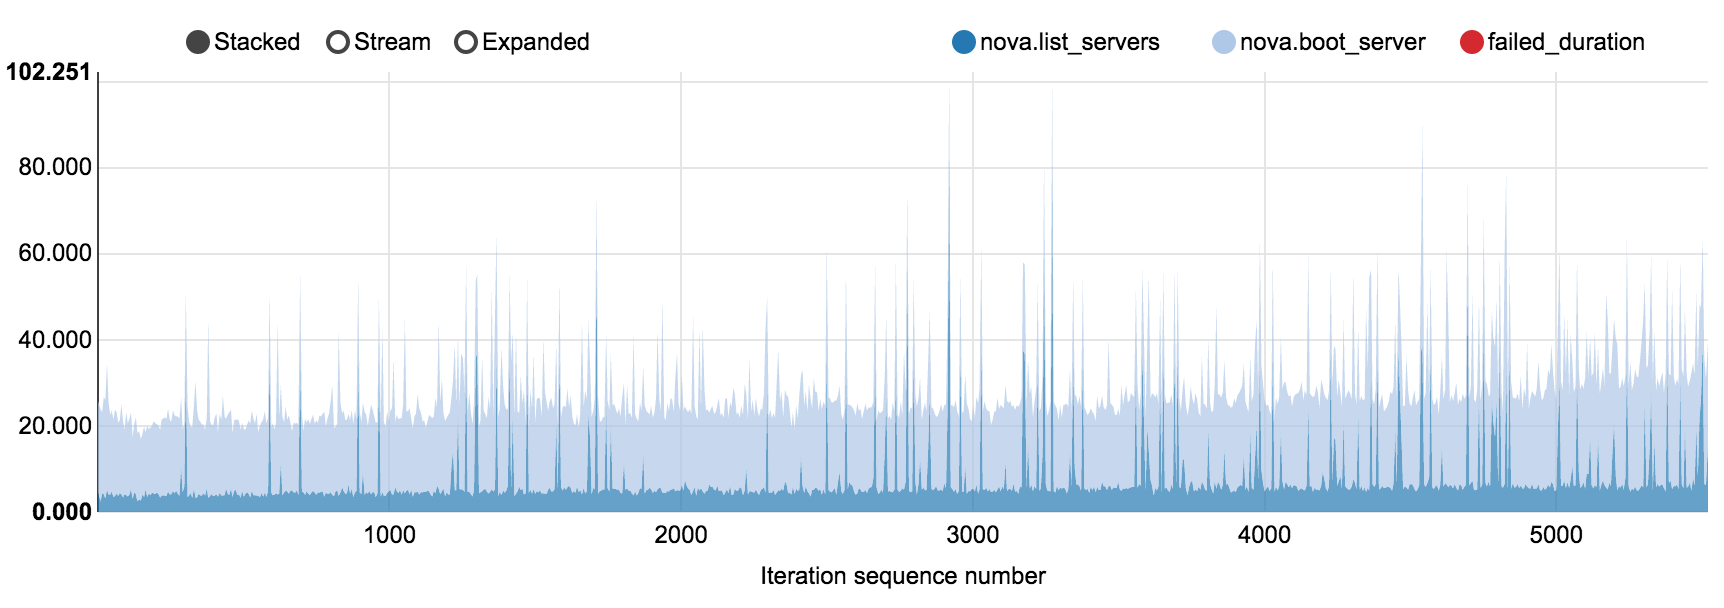 Boot and list servers Rally scenario (150 nodes)